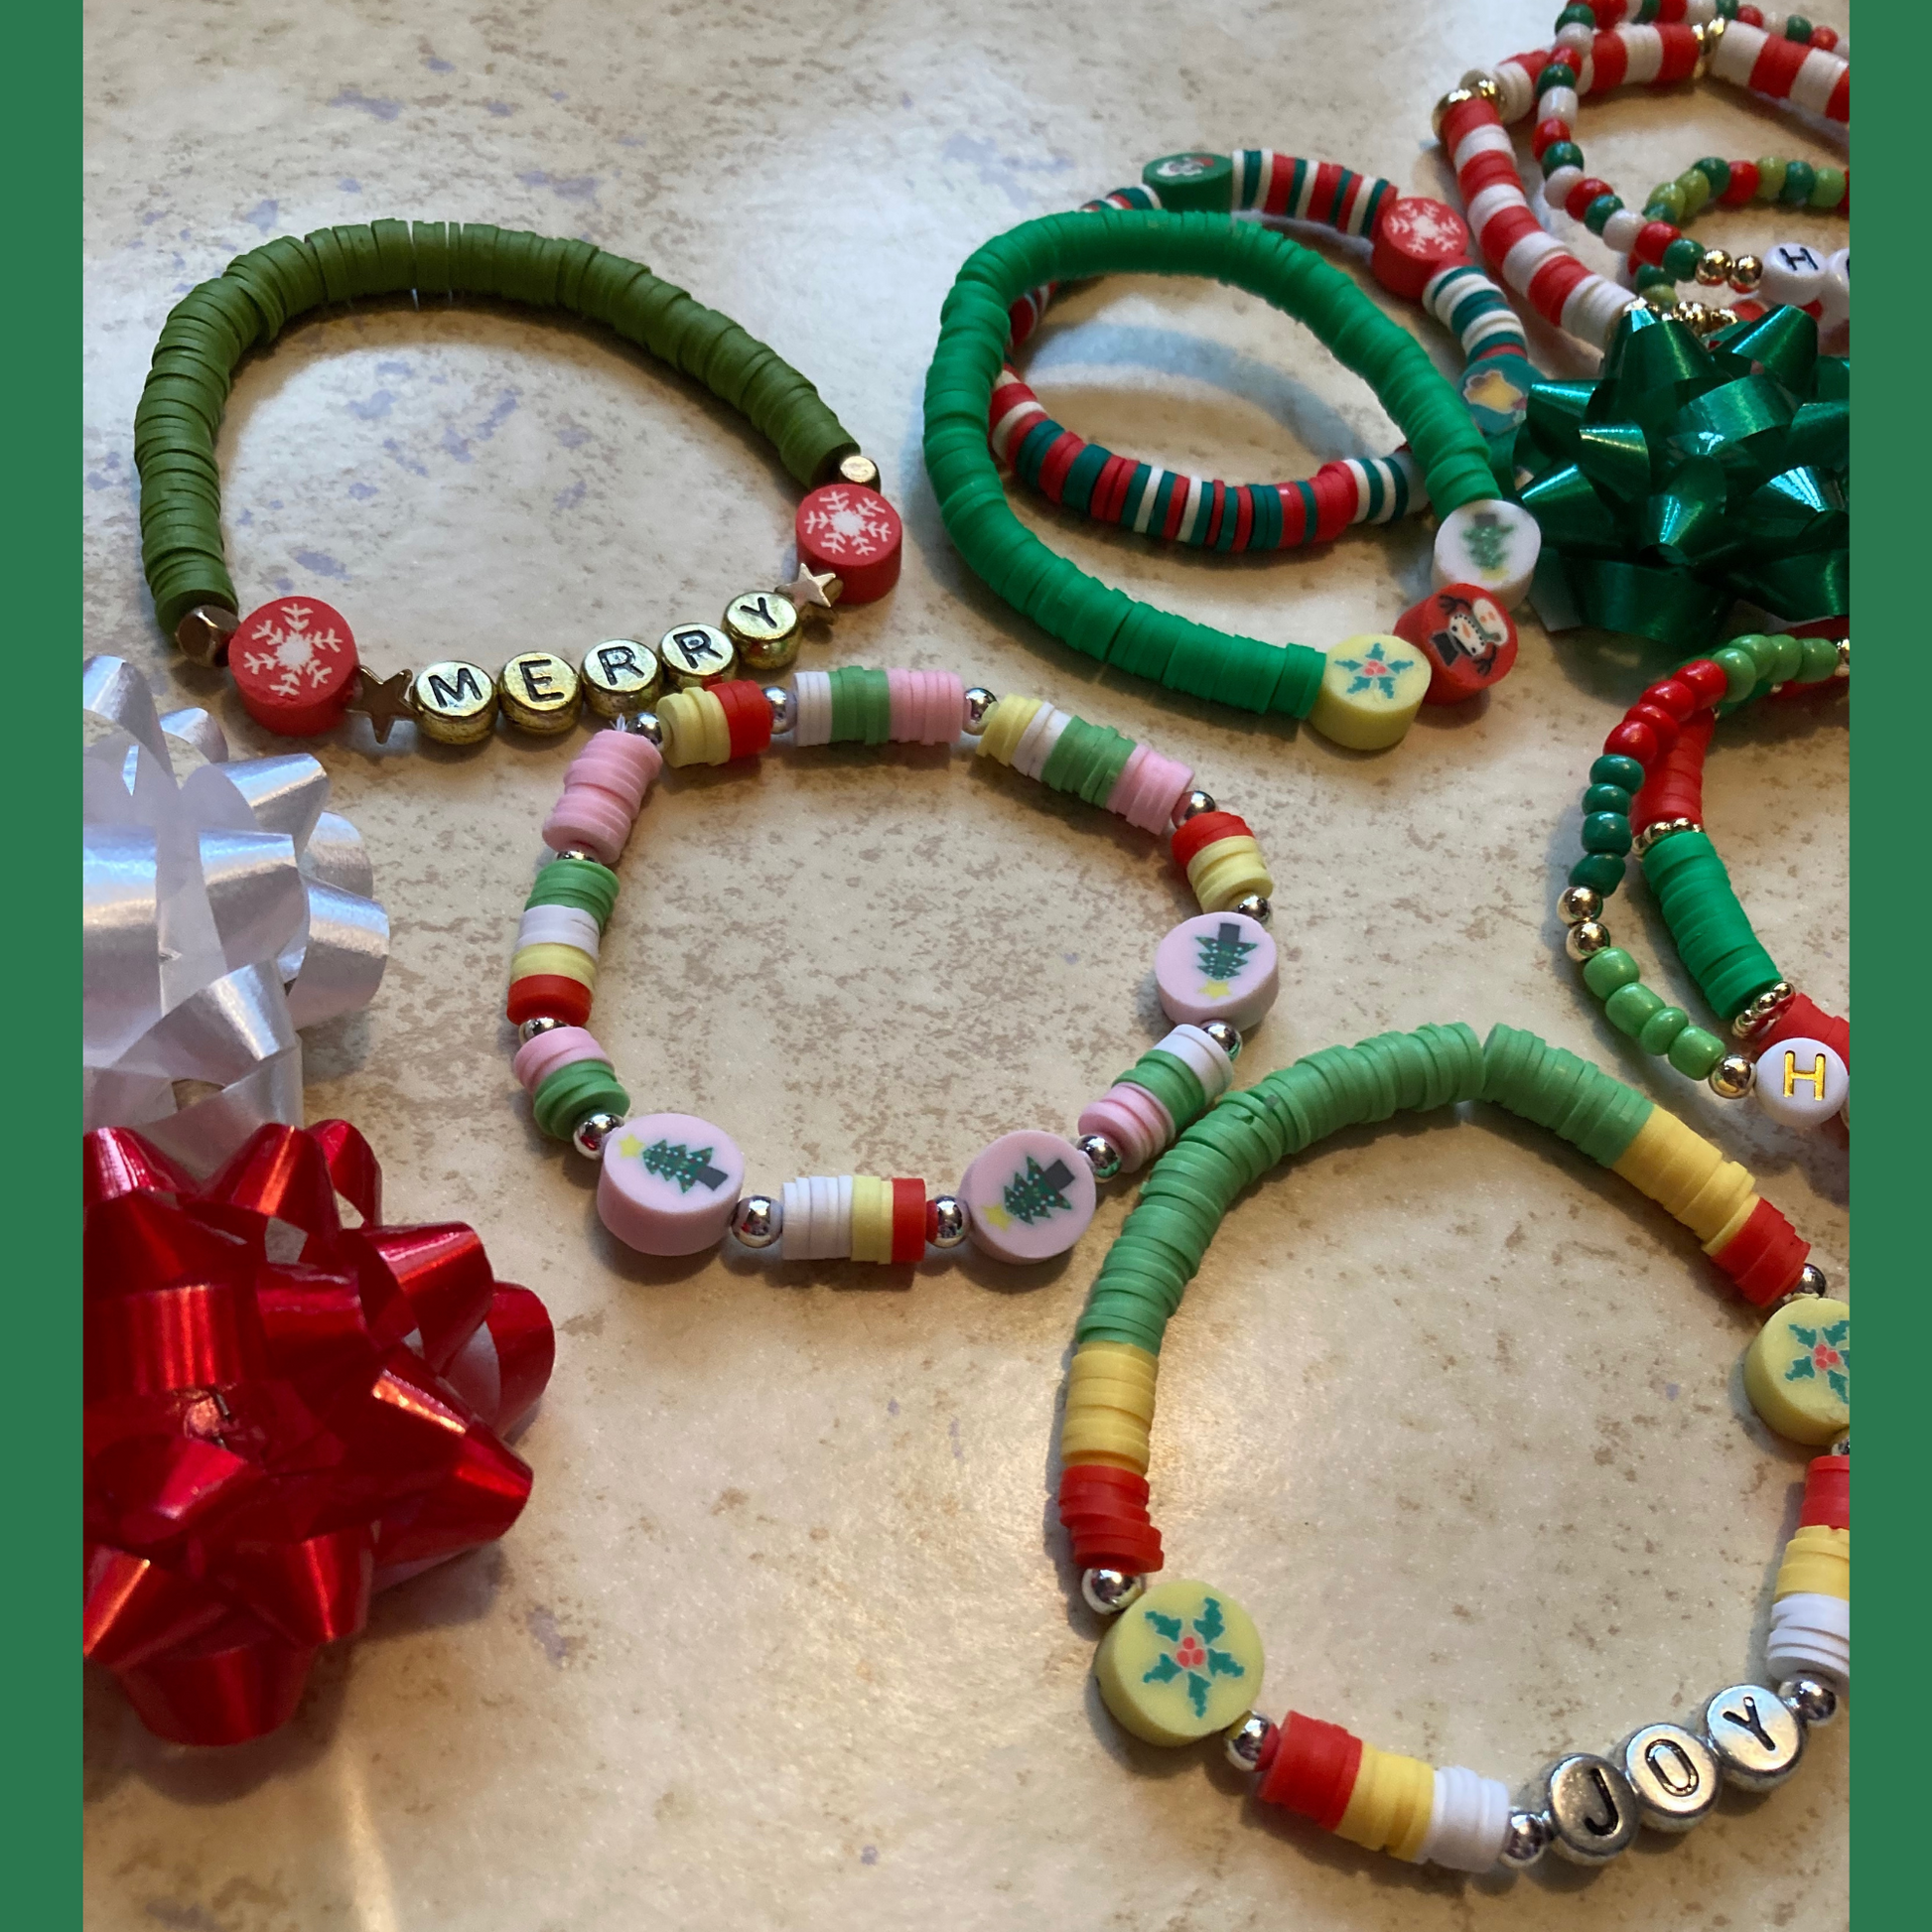 Handmade Colorful Customizable Beaded Bracelets, Seed Bead